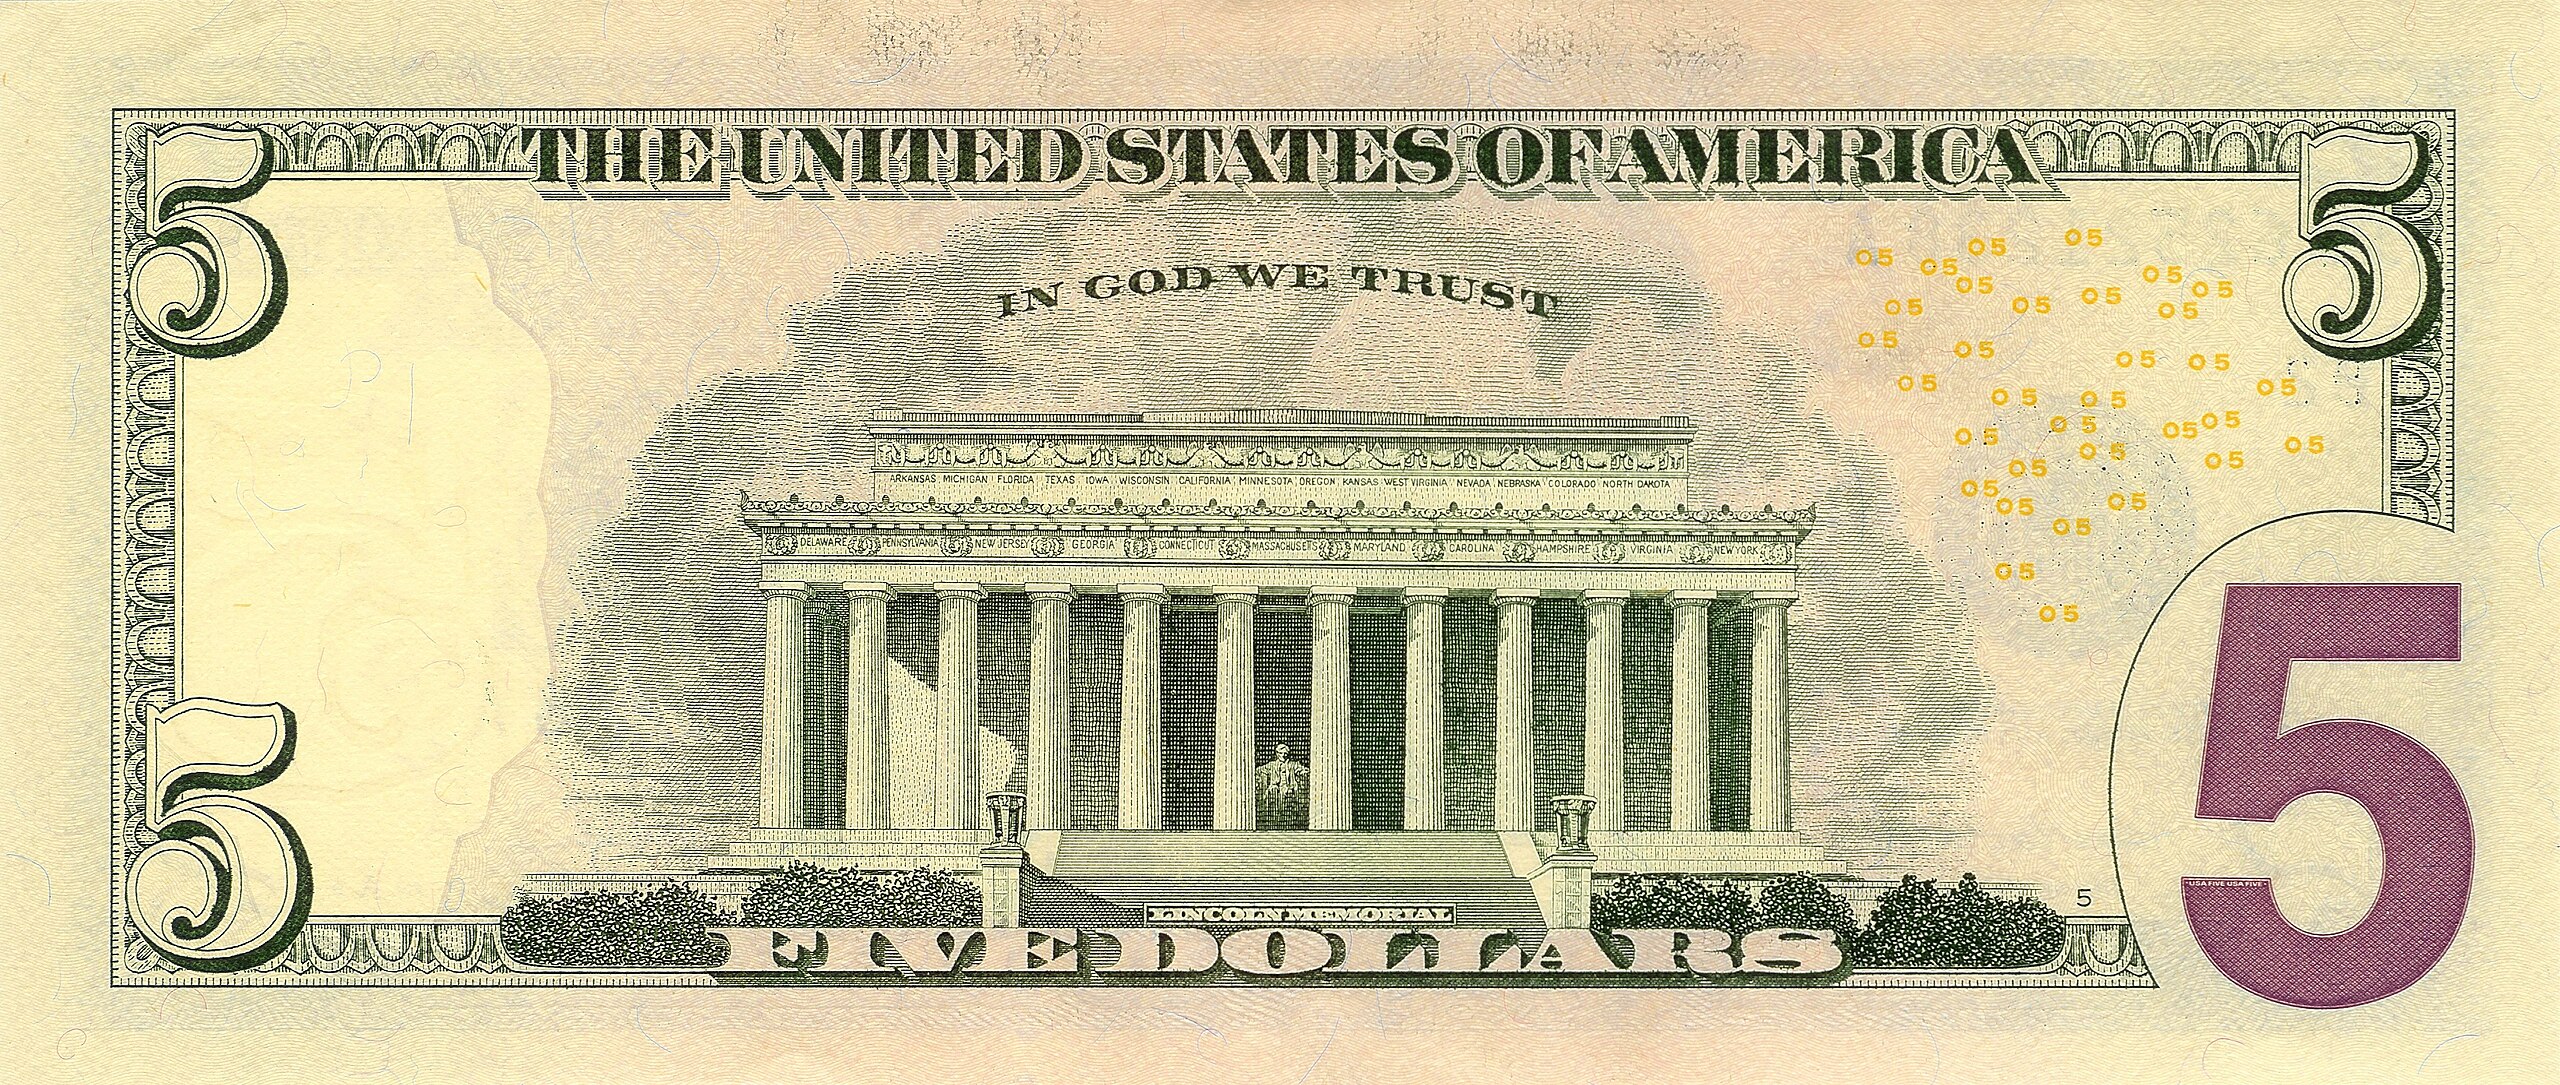 File:50 USD Series 2004 Note Back.jpg - Wikipedia